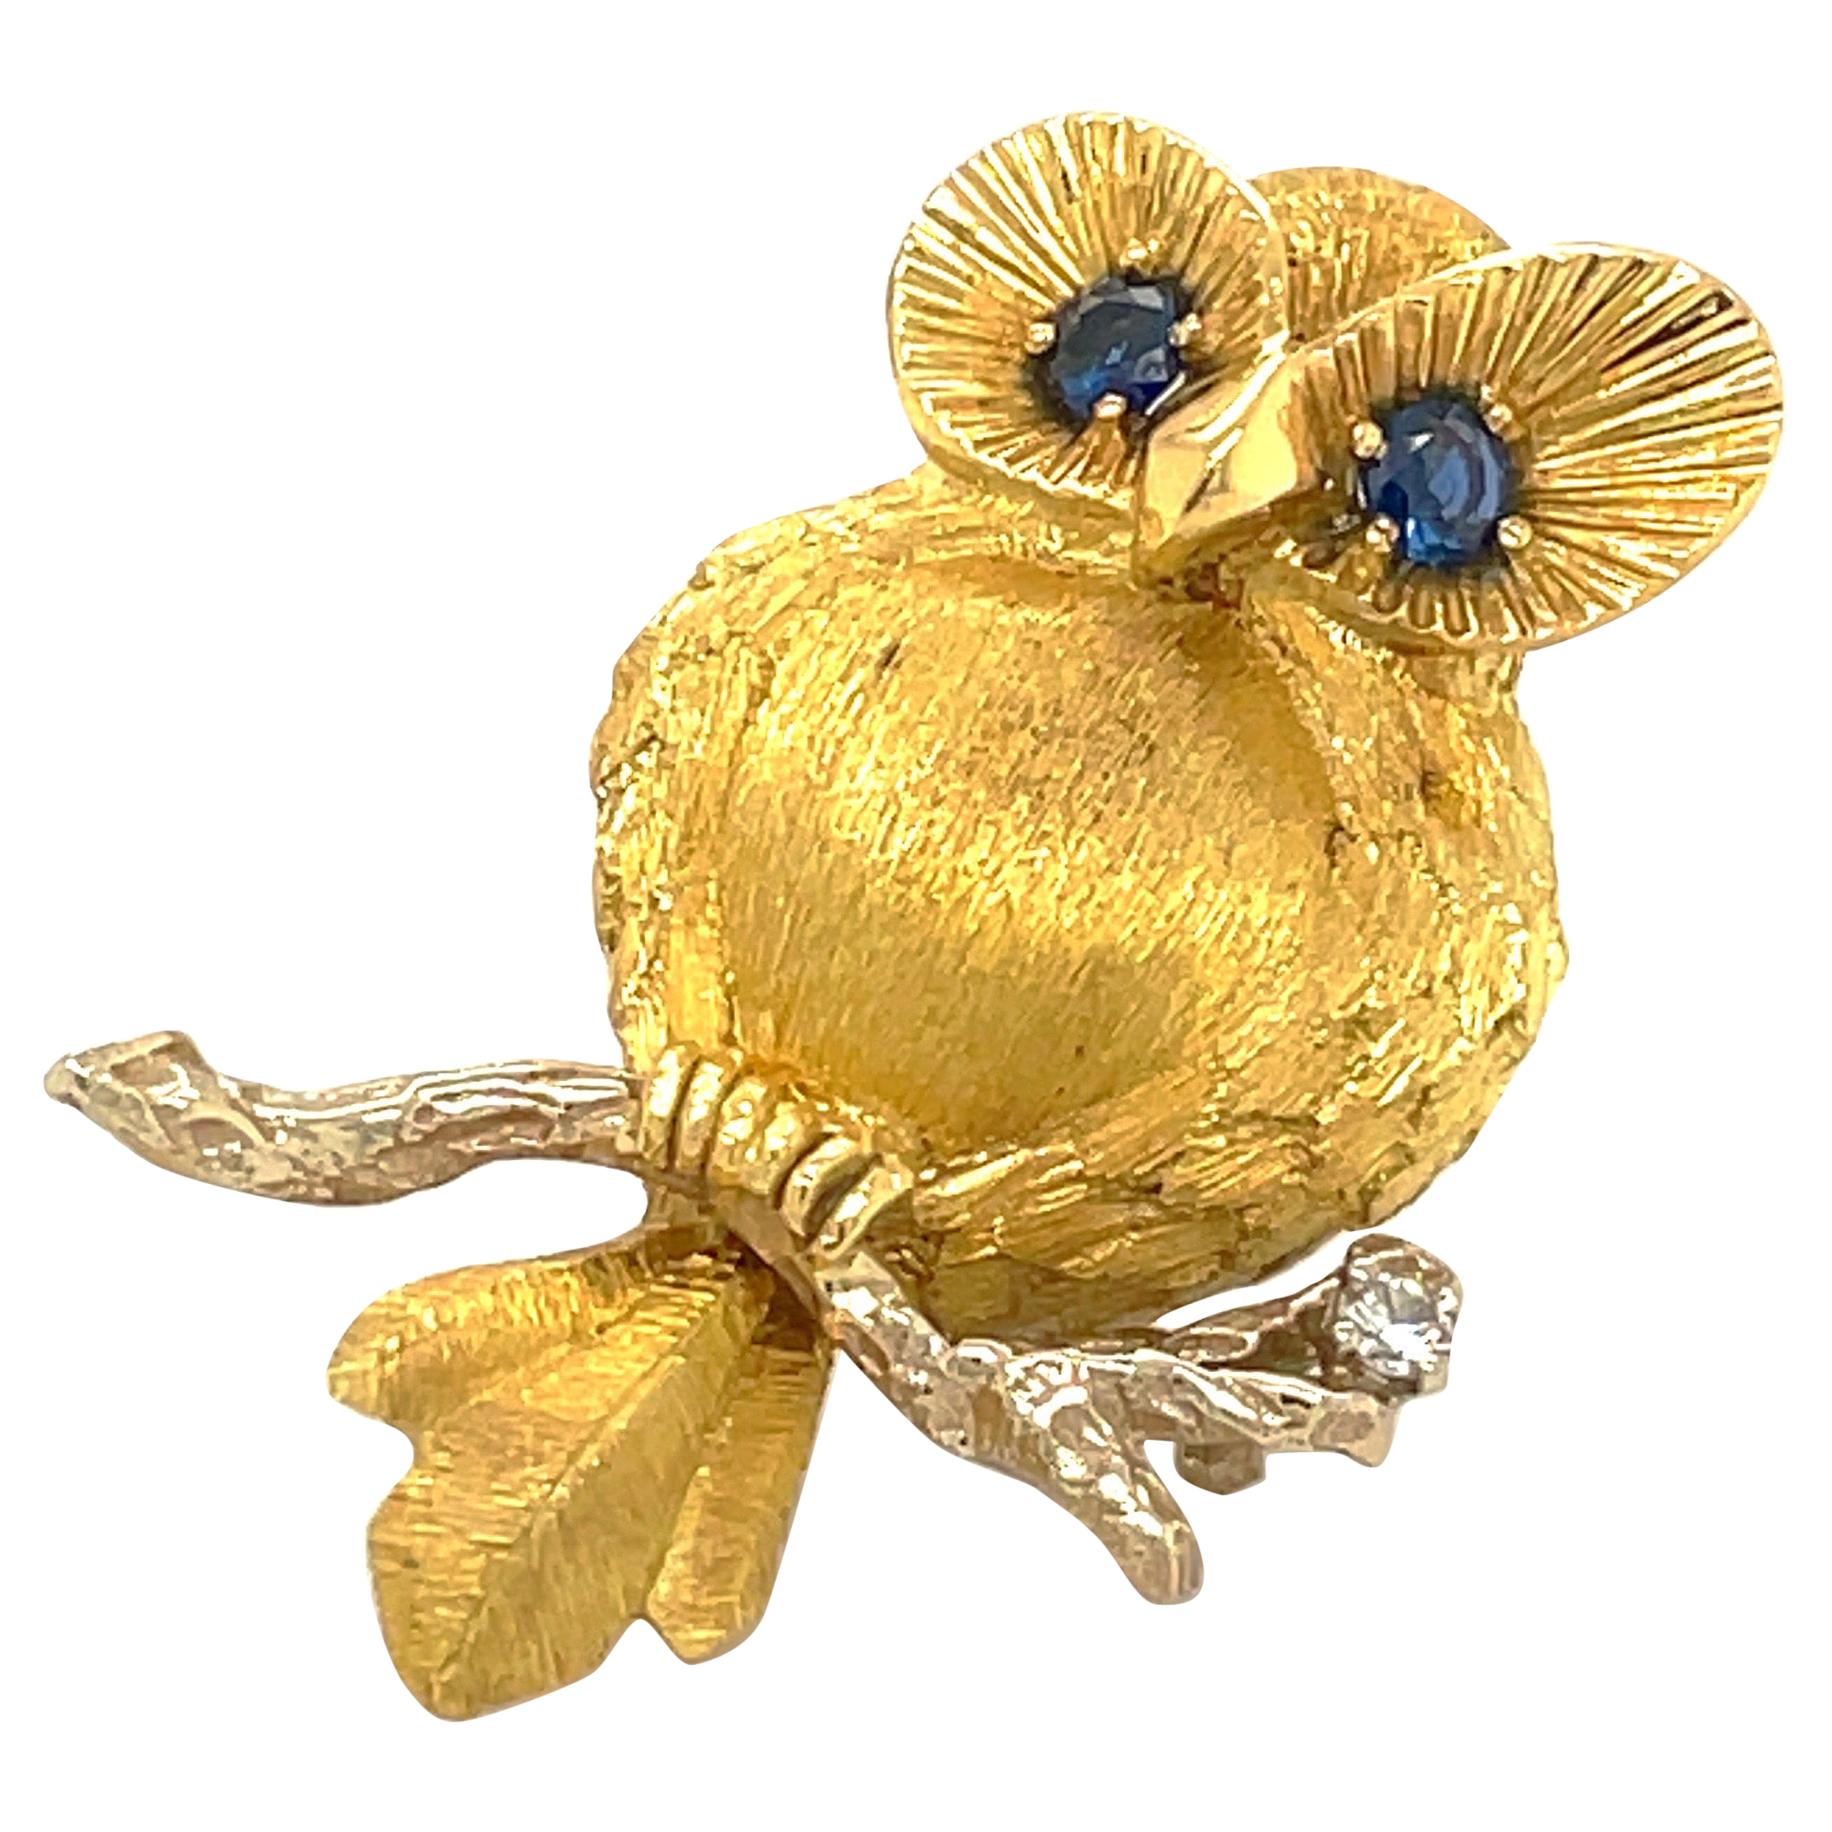 George Lederman 18kt Yellow Gold Owl Brooch with Blue Sapphire Eyes & Diamond